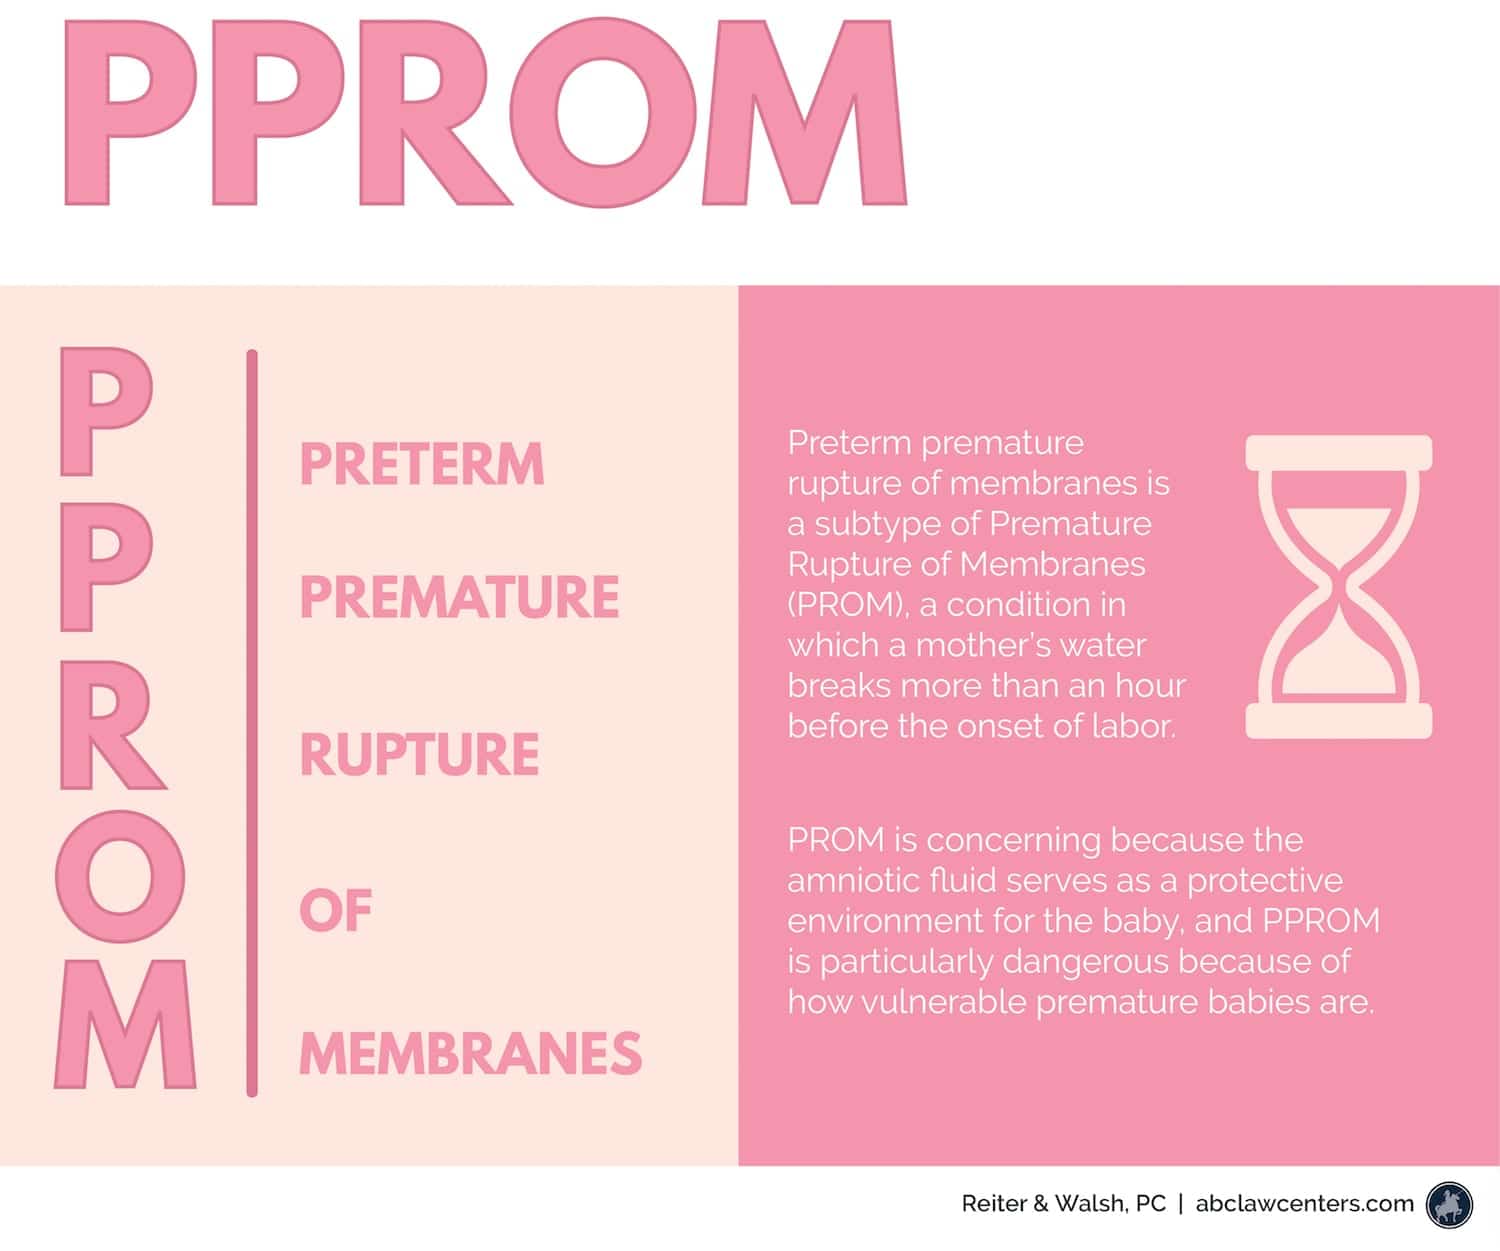 PPROM - Preterm Premature Rupture of Membranes